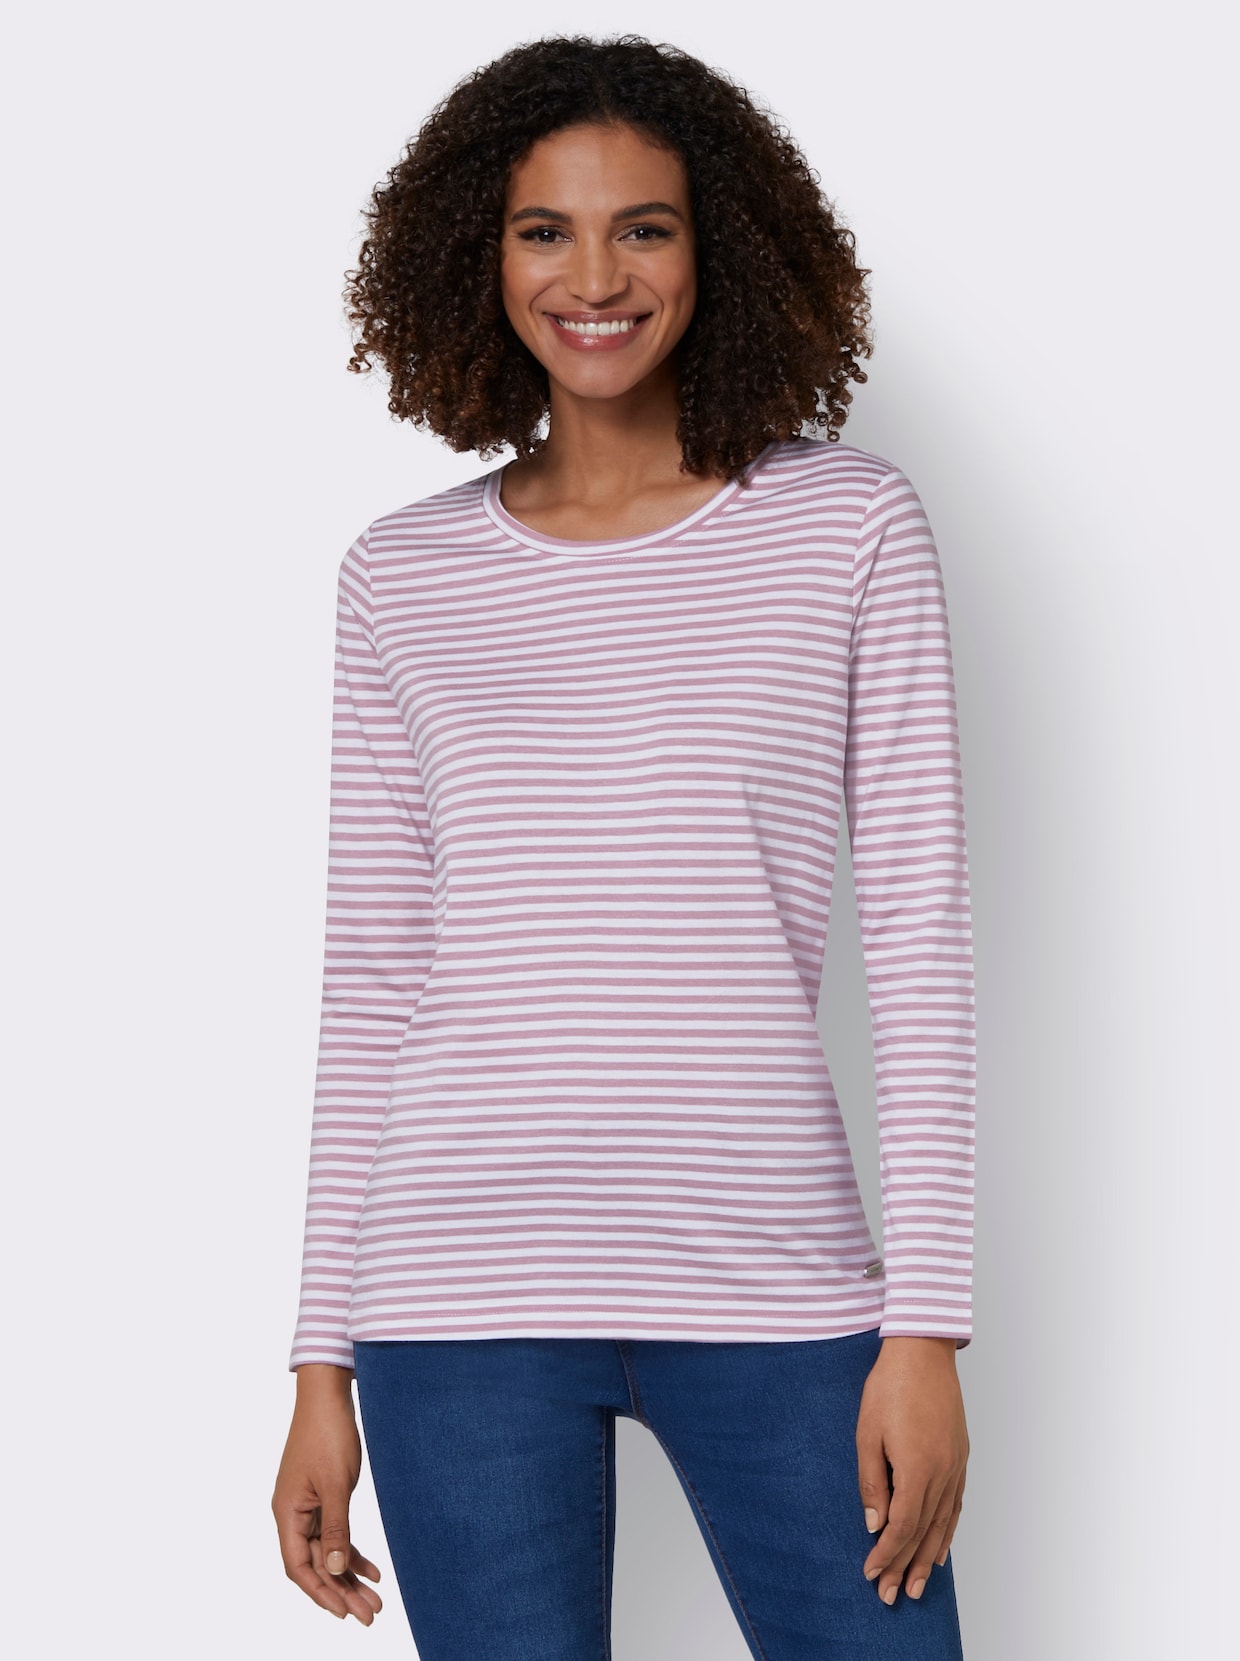 Gestreept shirt - roze/ecru gestreept